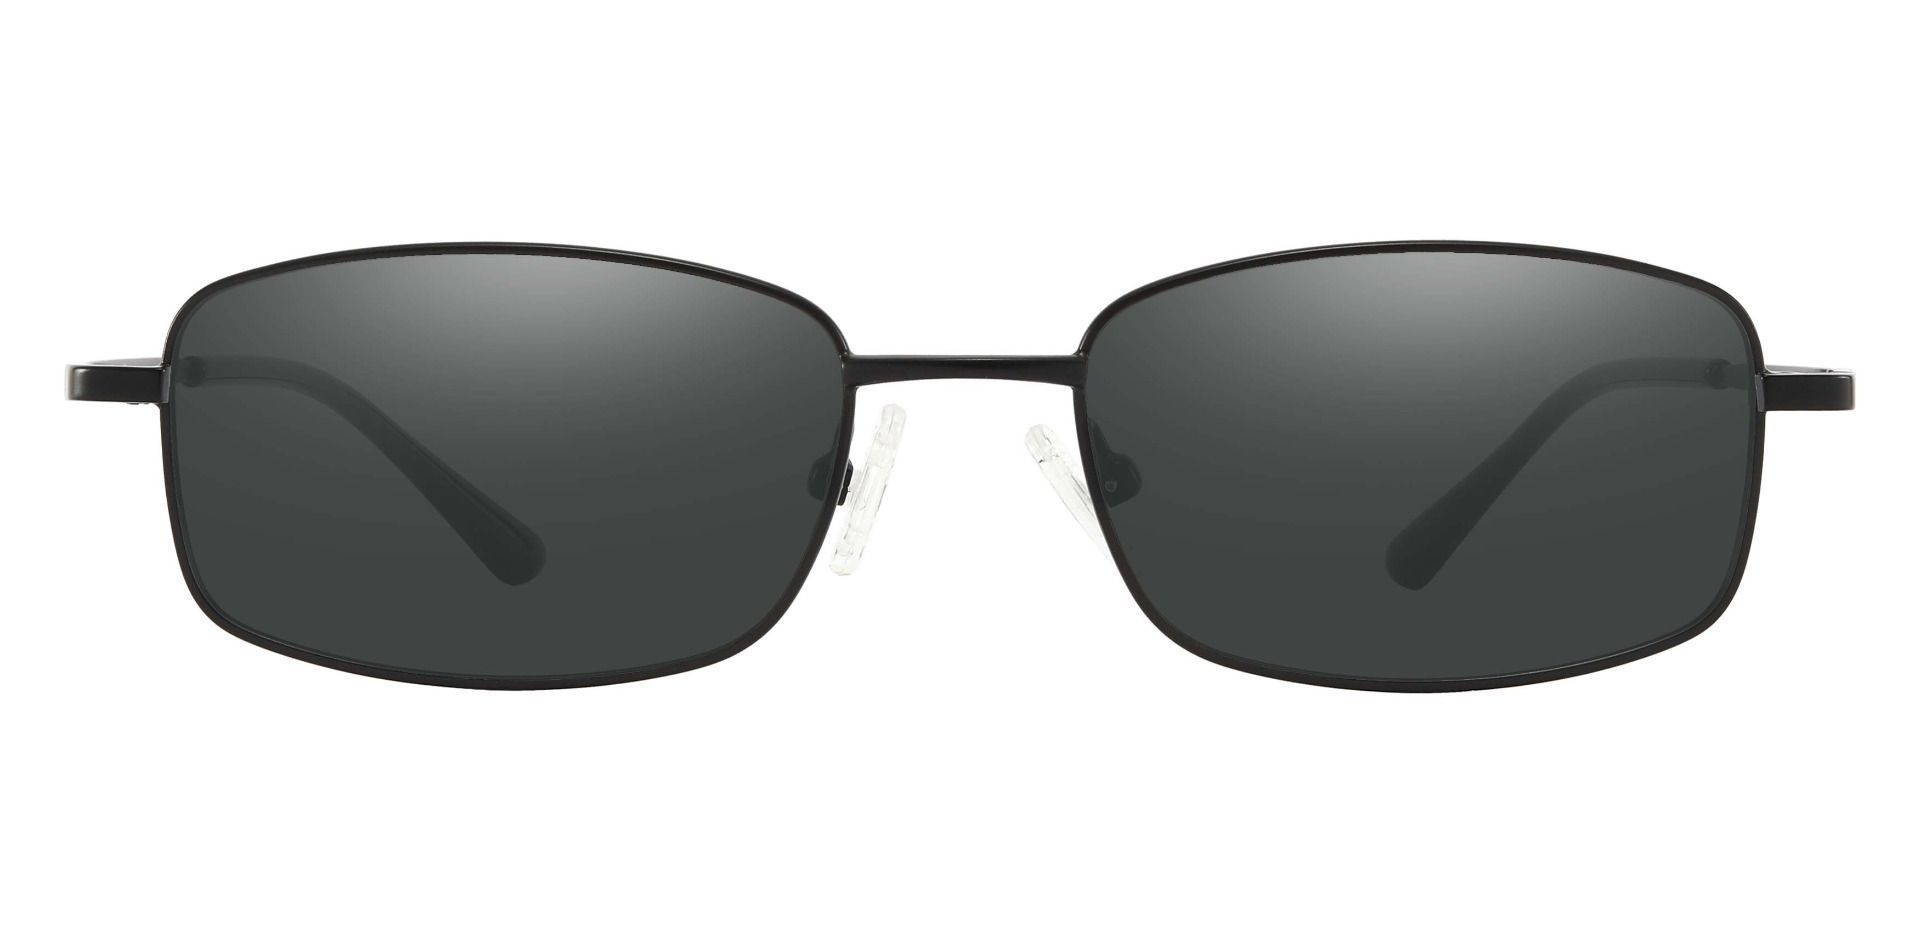 Hellman Rectangle Non-Rx Sunglasses - Black Frame With Gray Lenses